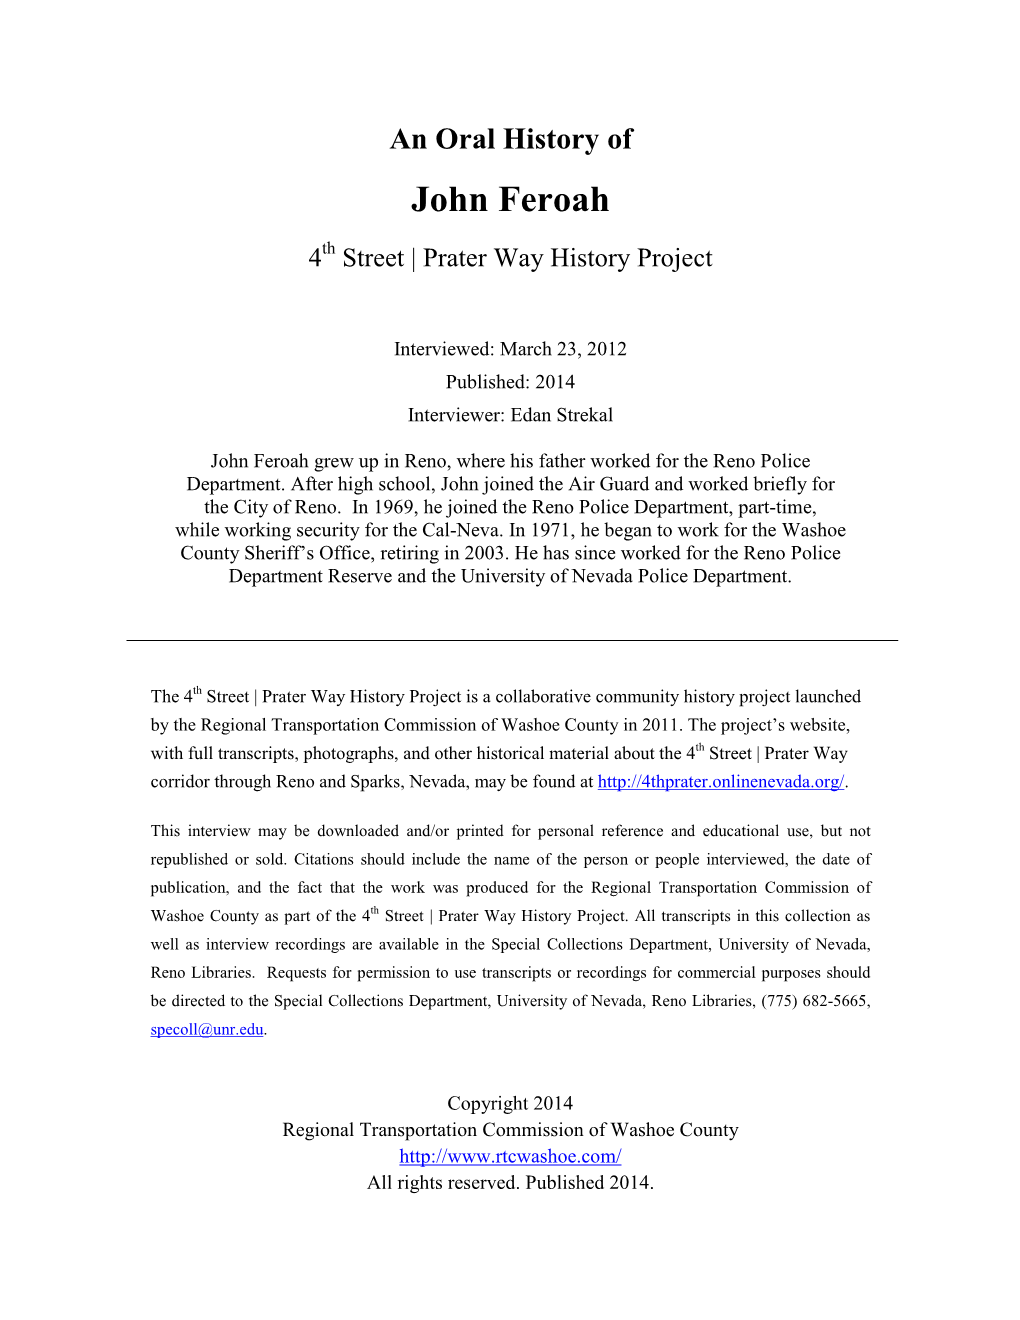 An Oral History of John Feroah 4Th Street | Prater Way History Project